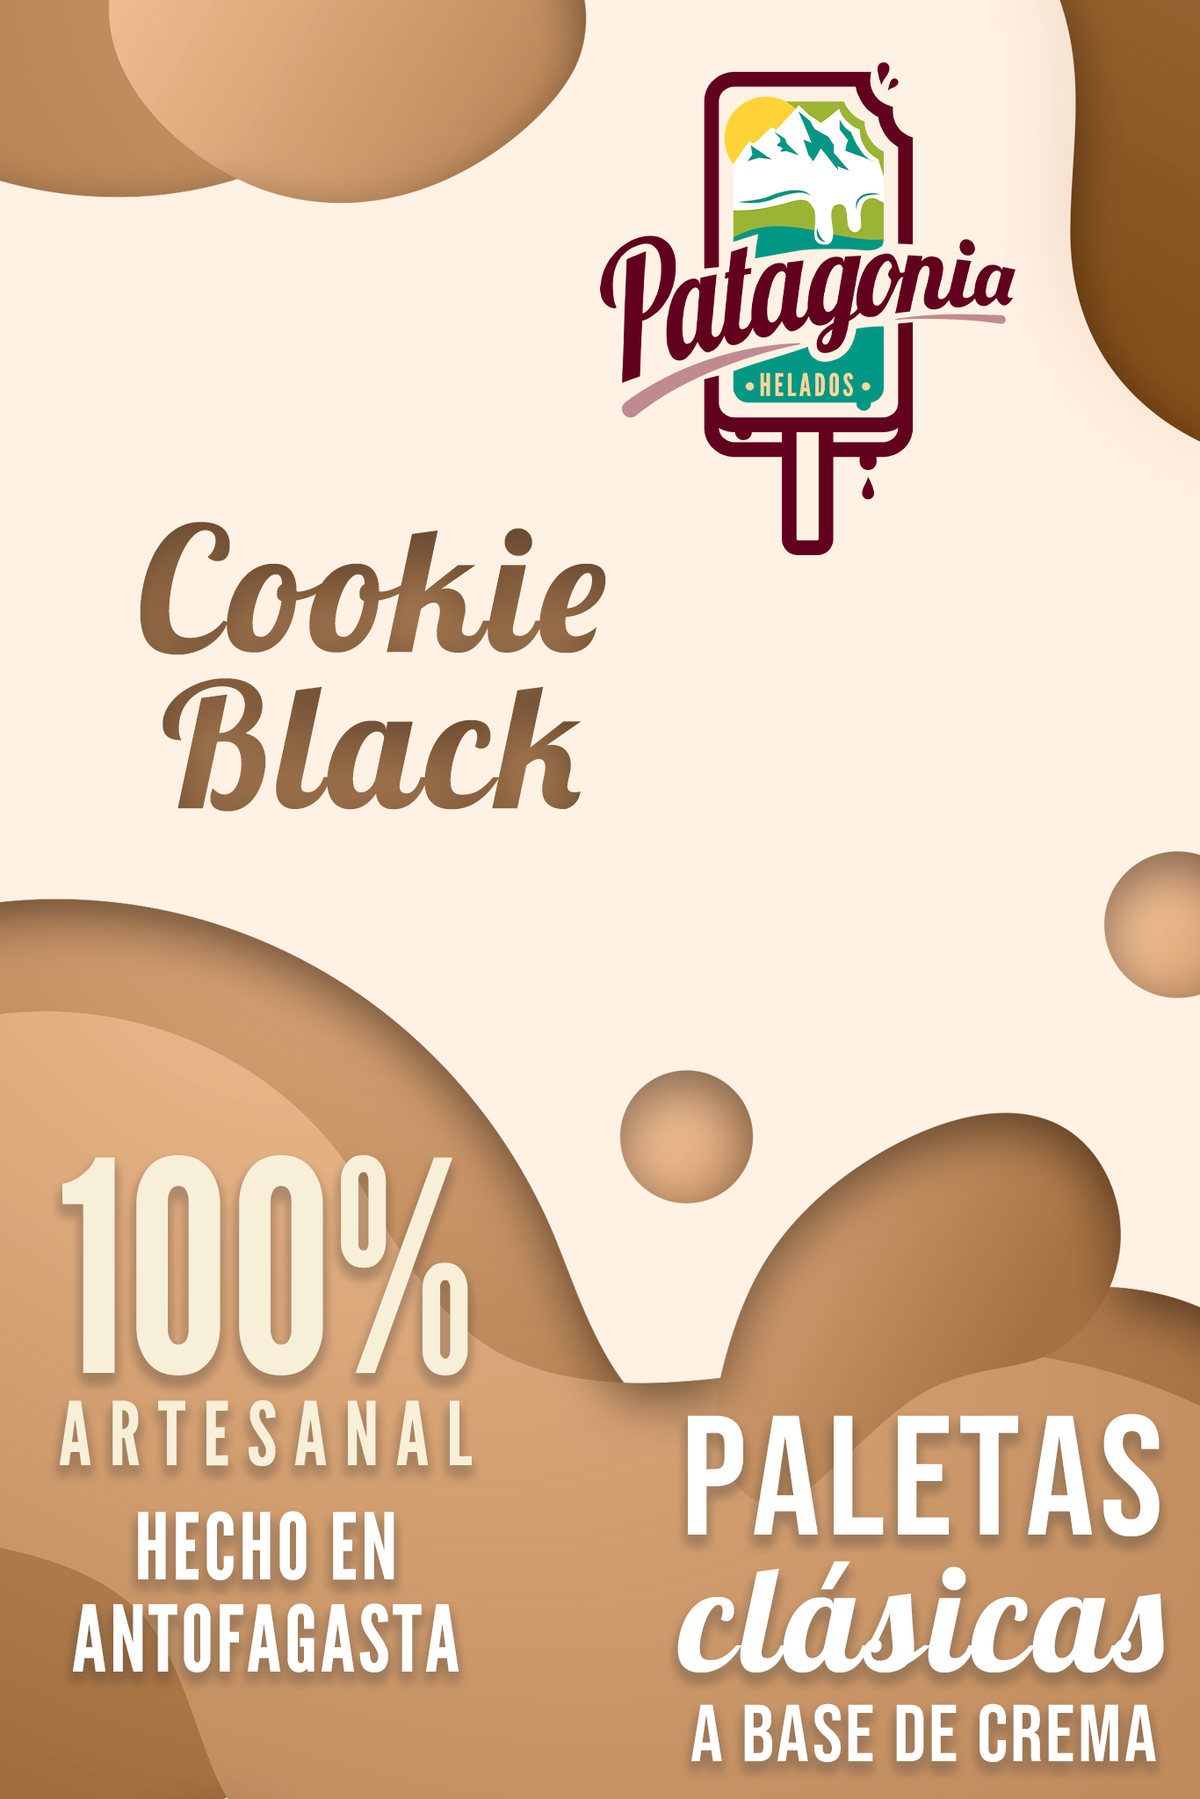 Paleta Cookies Black ( Oreo )